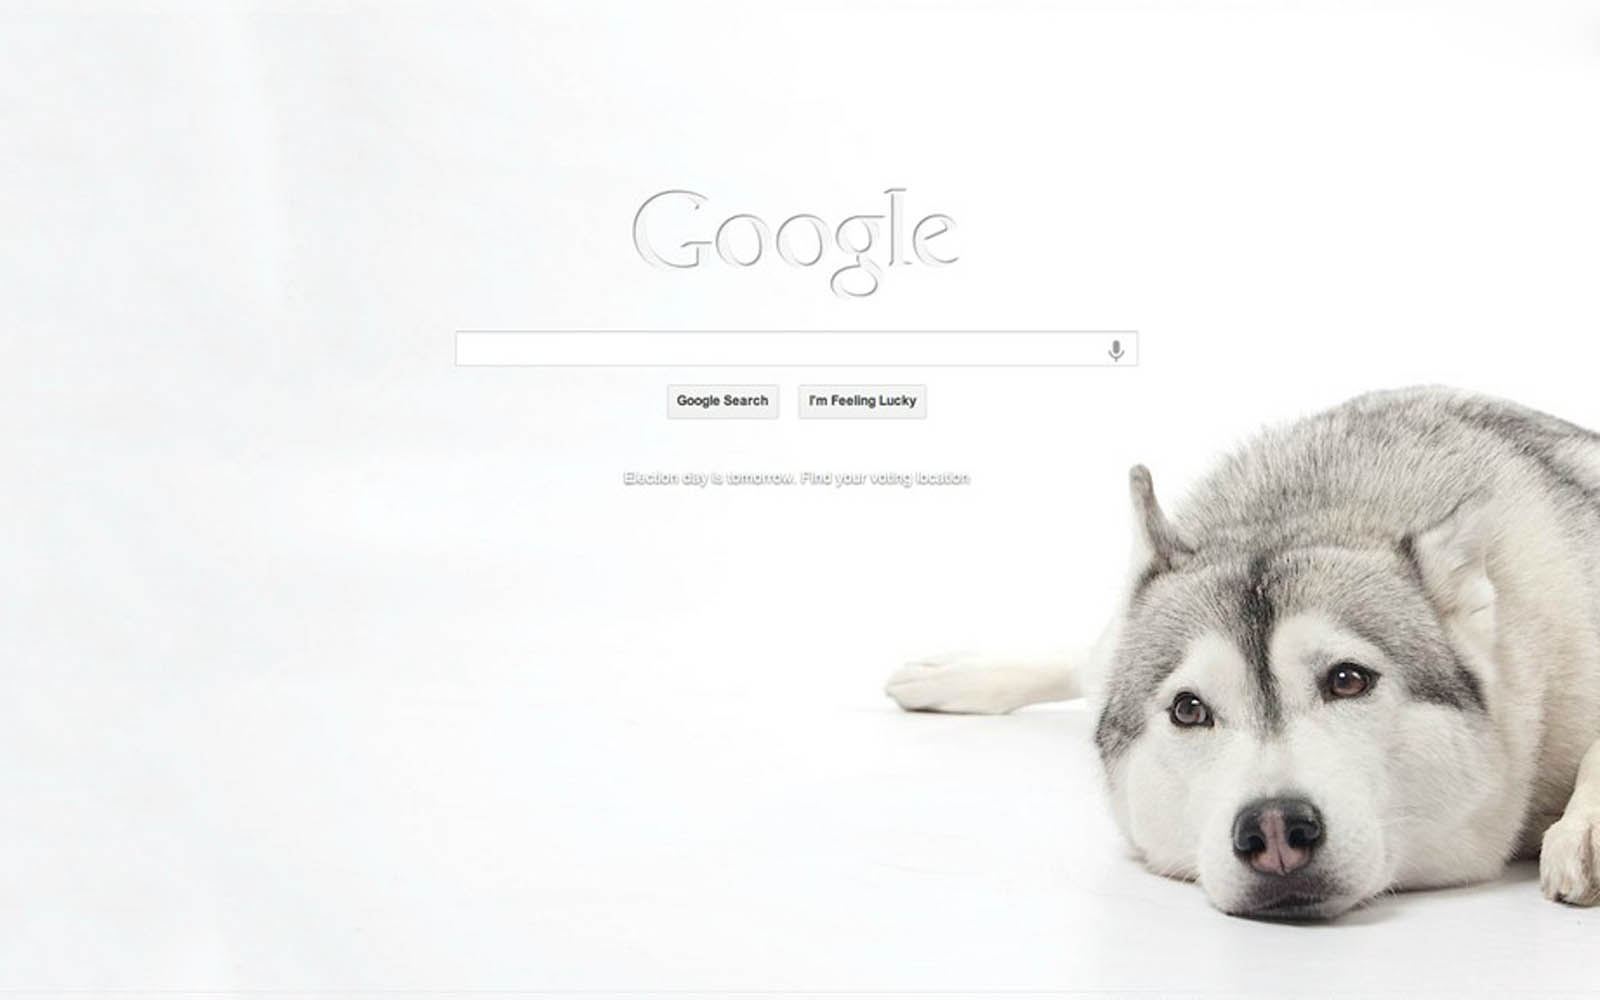 The Google Background DesktopBackground Wallpaper